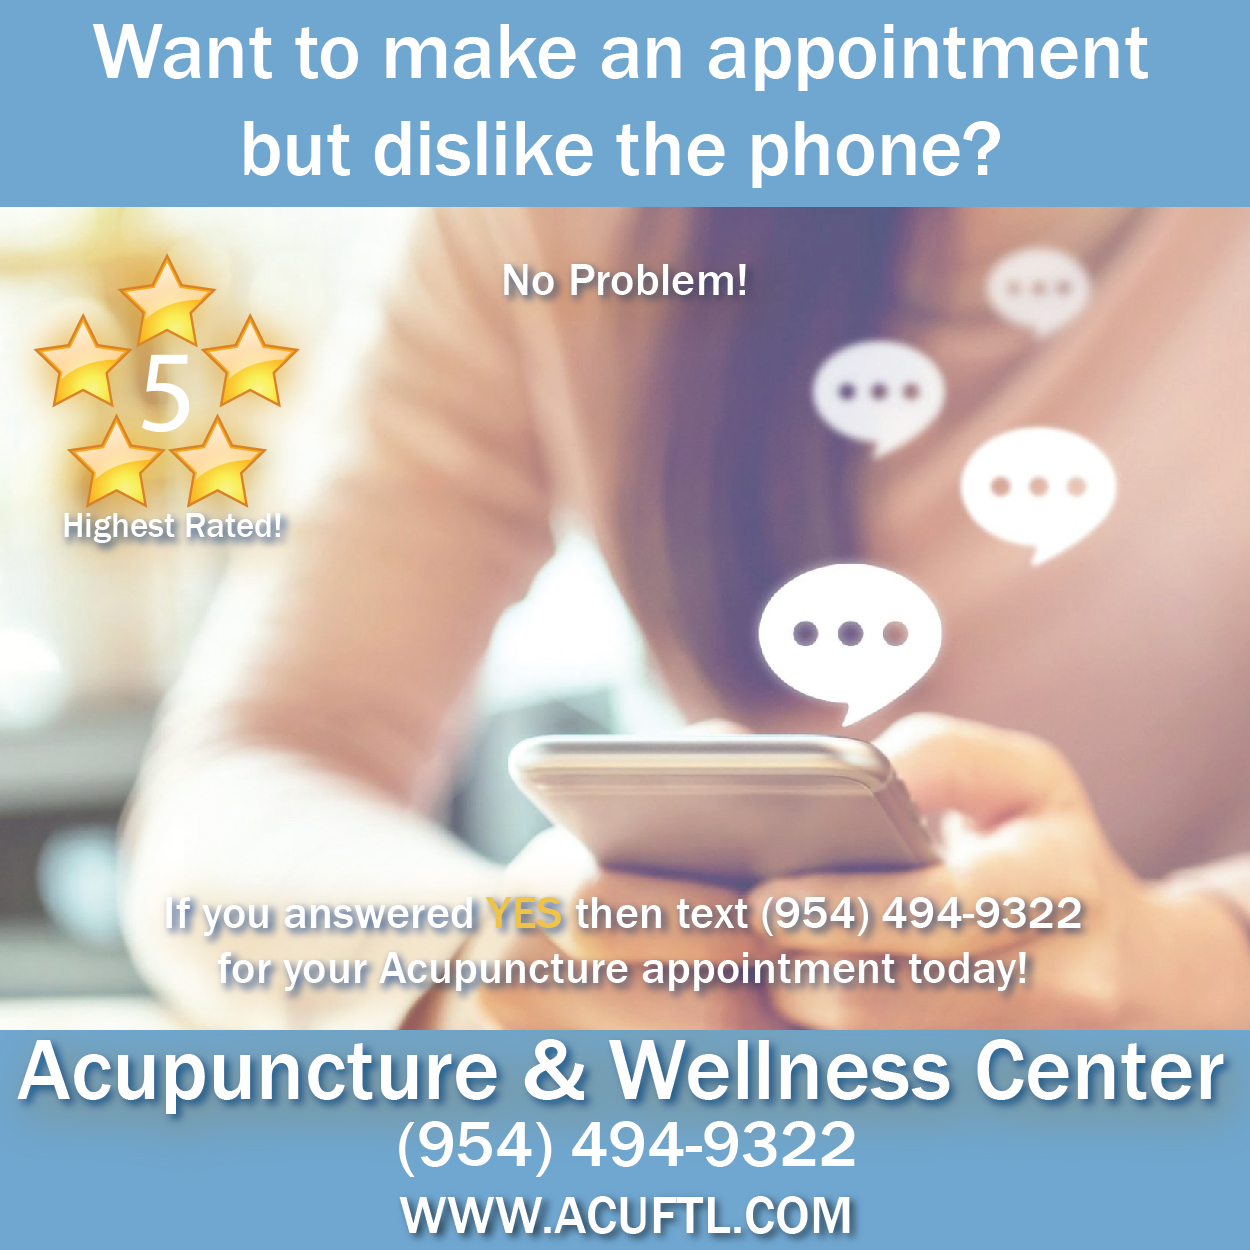 Acupuncture & Wellness Center